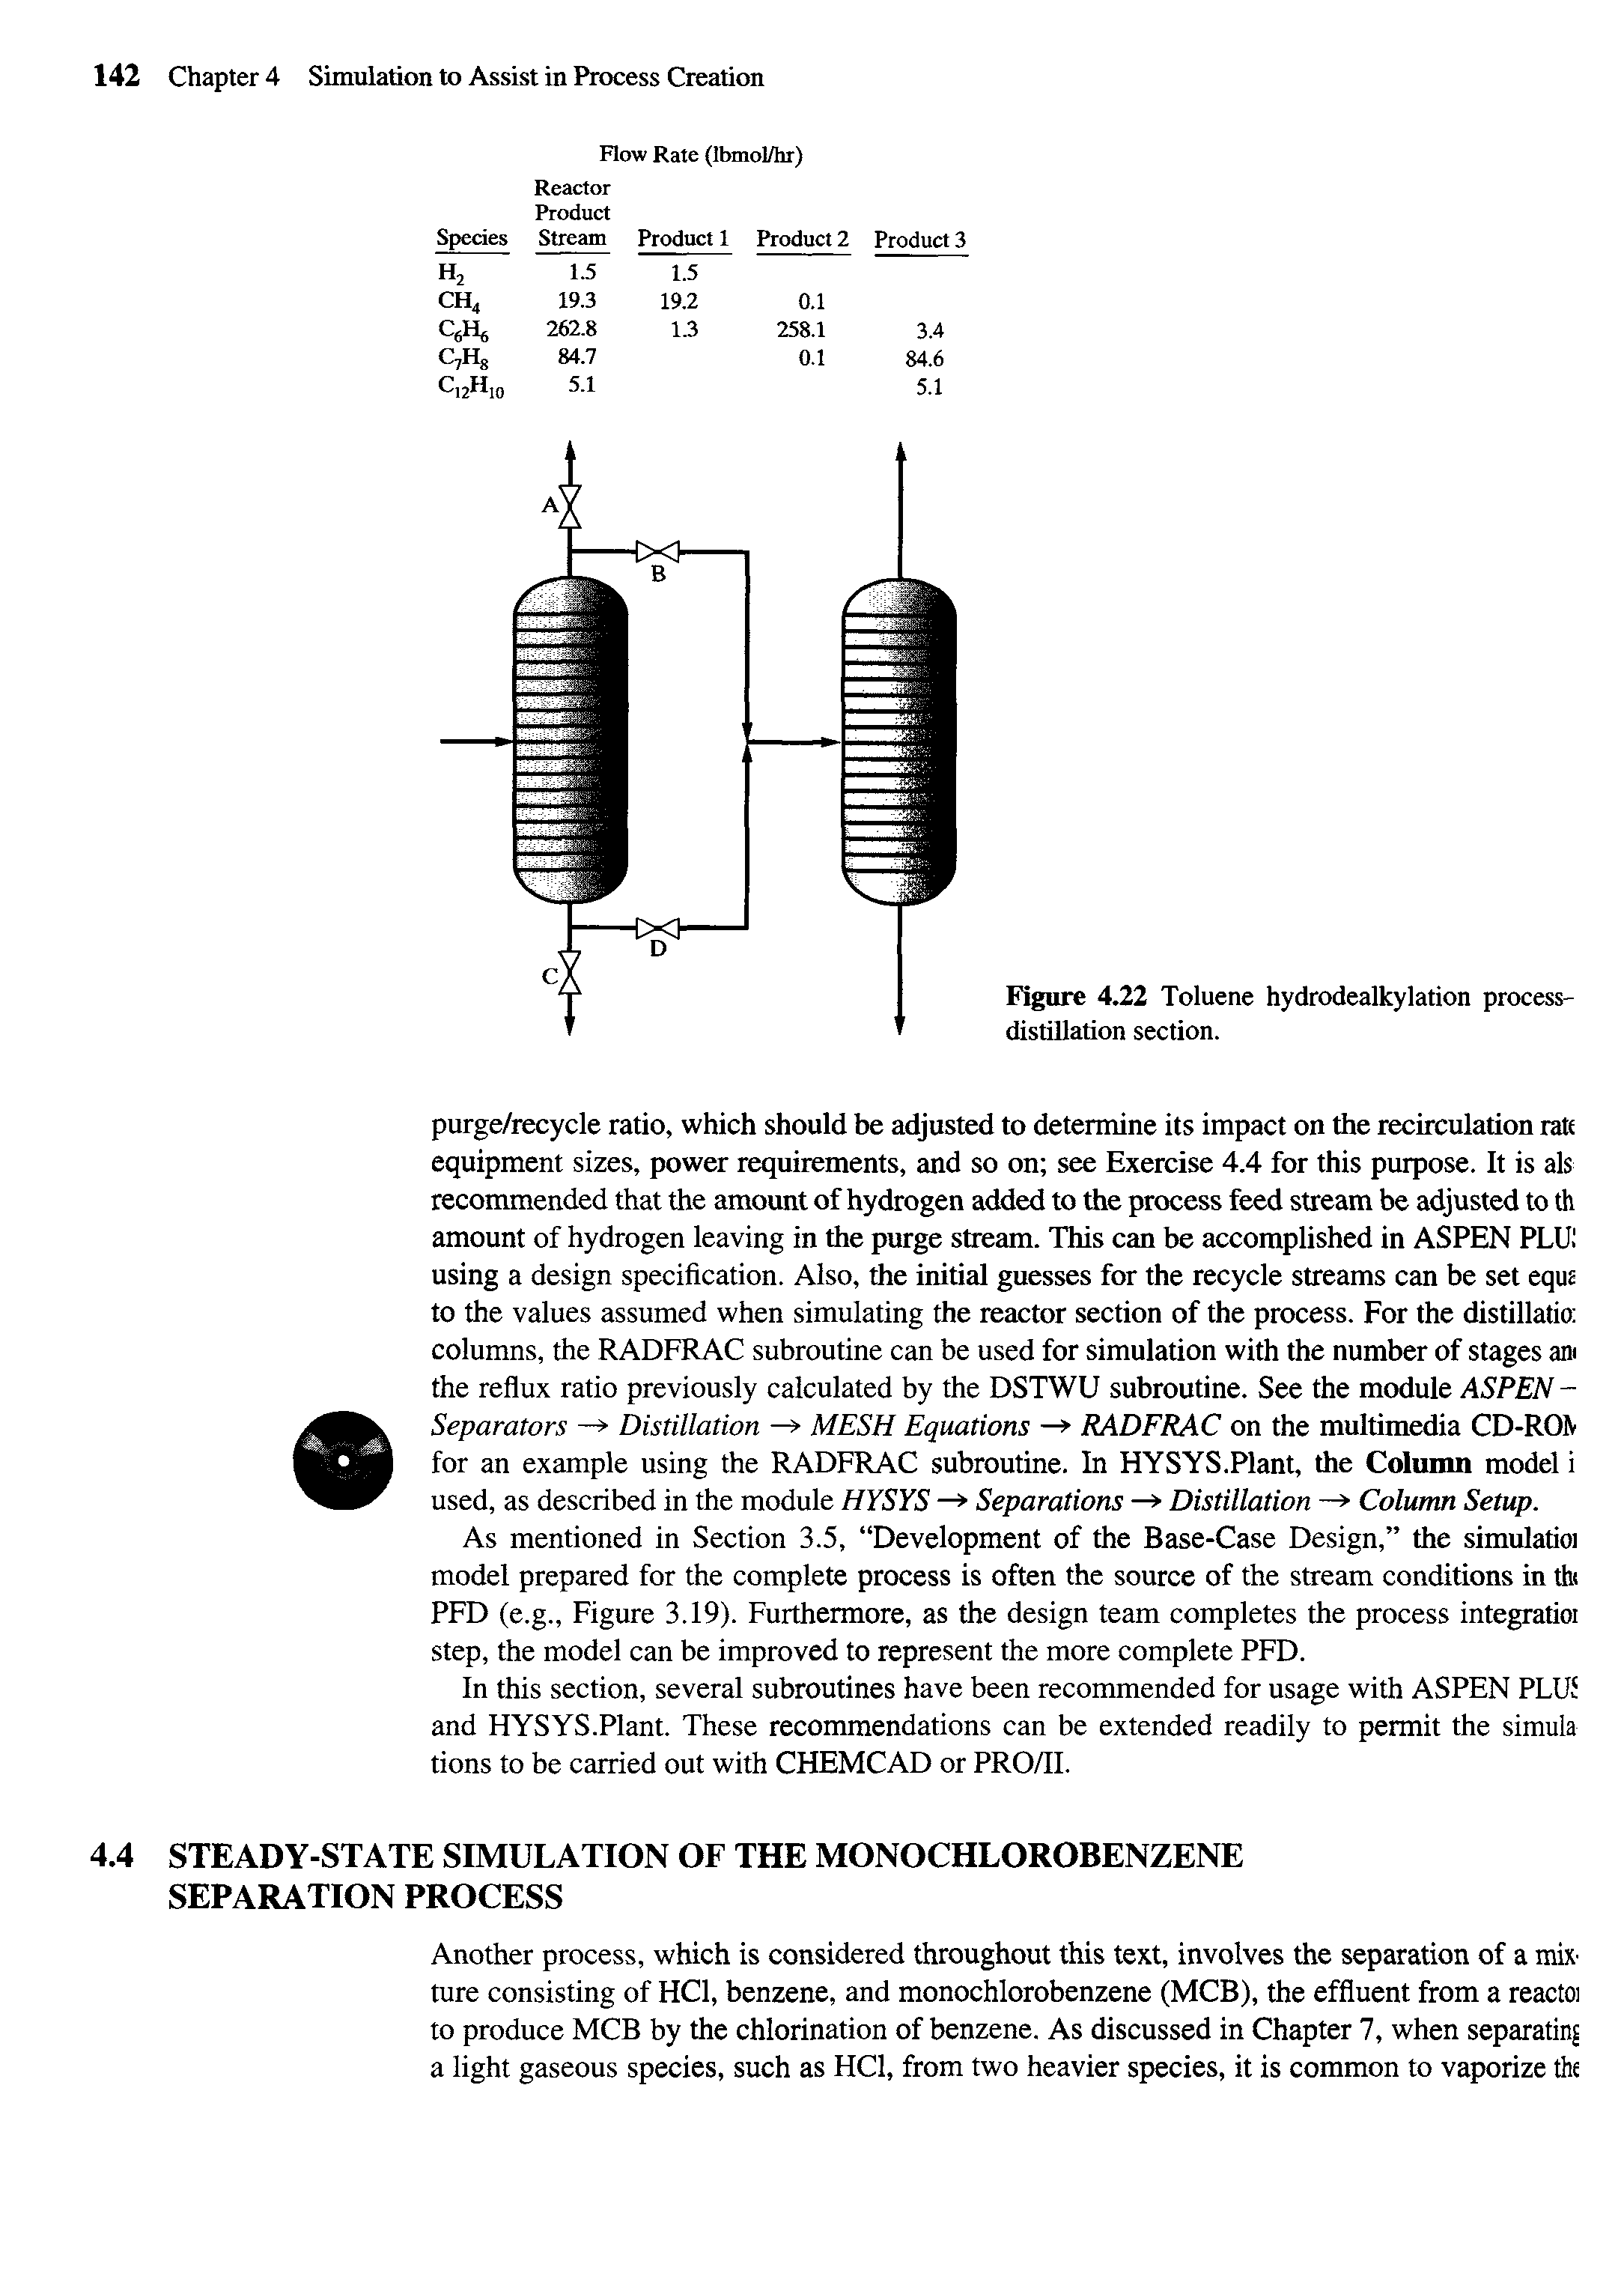 Figure 4.22 Toluene hydrodealkylation process-distillation section.